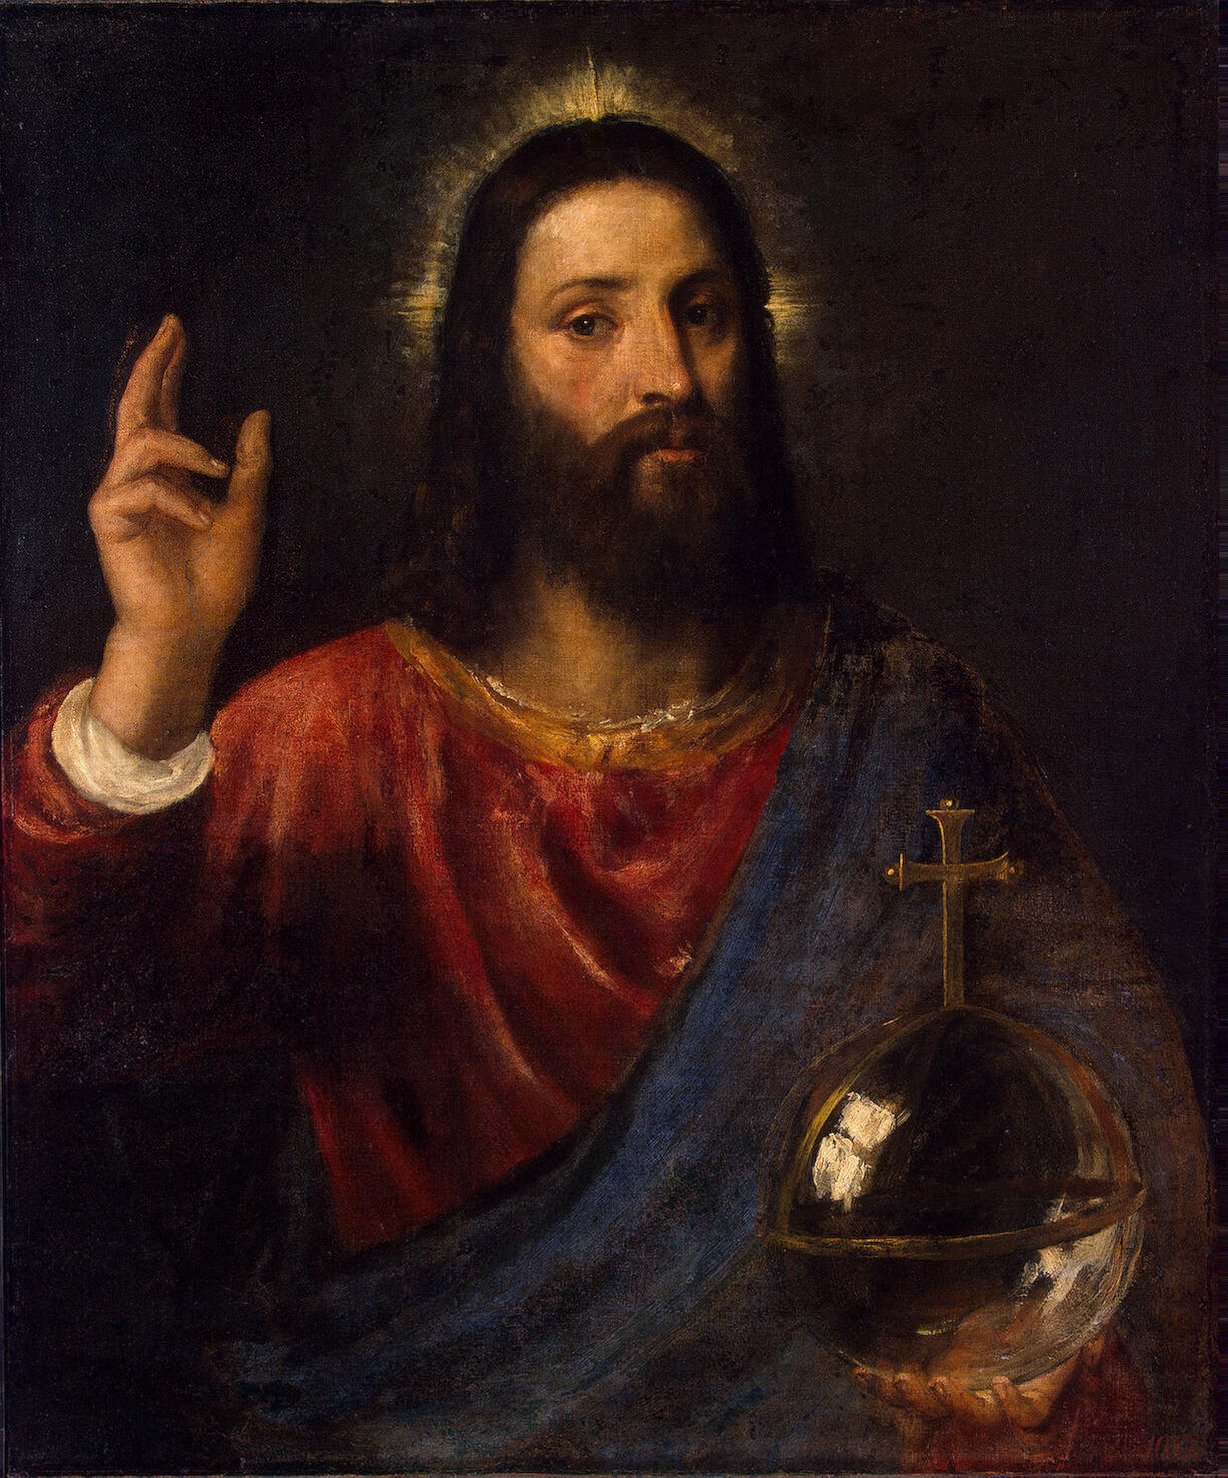 Titian,_Salvator_Mundi_(Christ_Blessing),_c._1570,_oil_on_canvas,_96_x_80_cm,_Hermitage_Museum.jpg